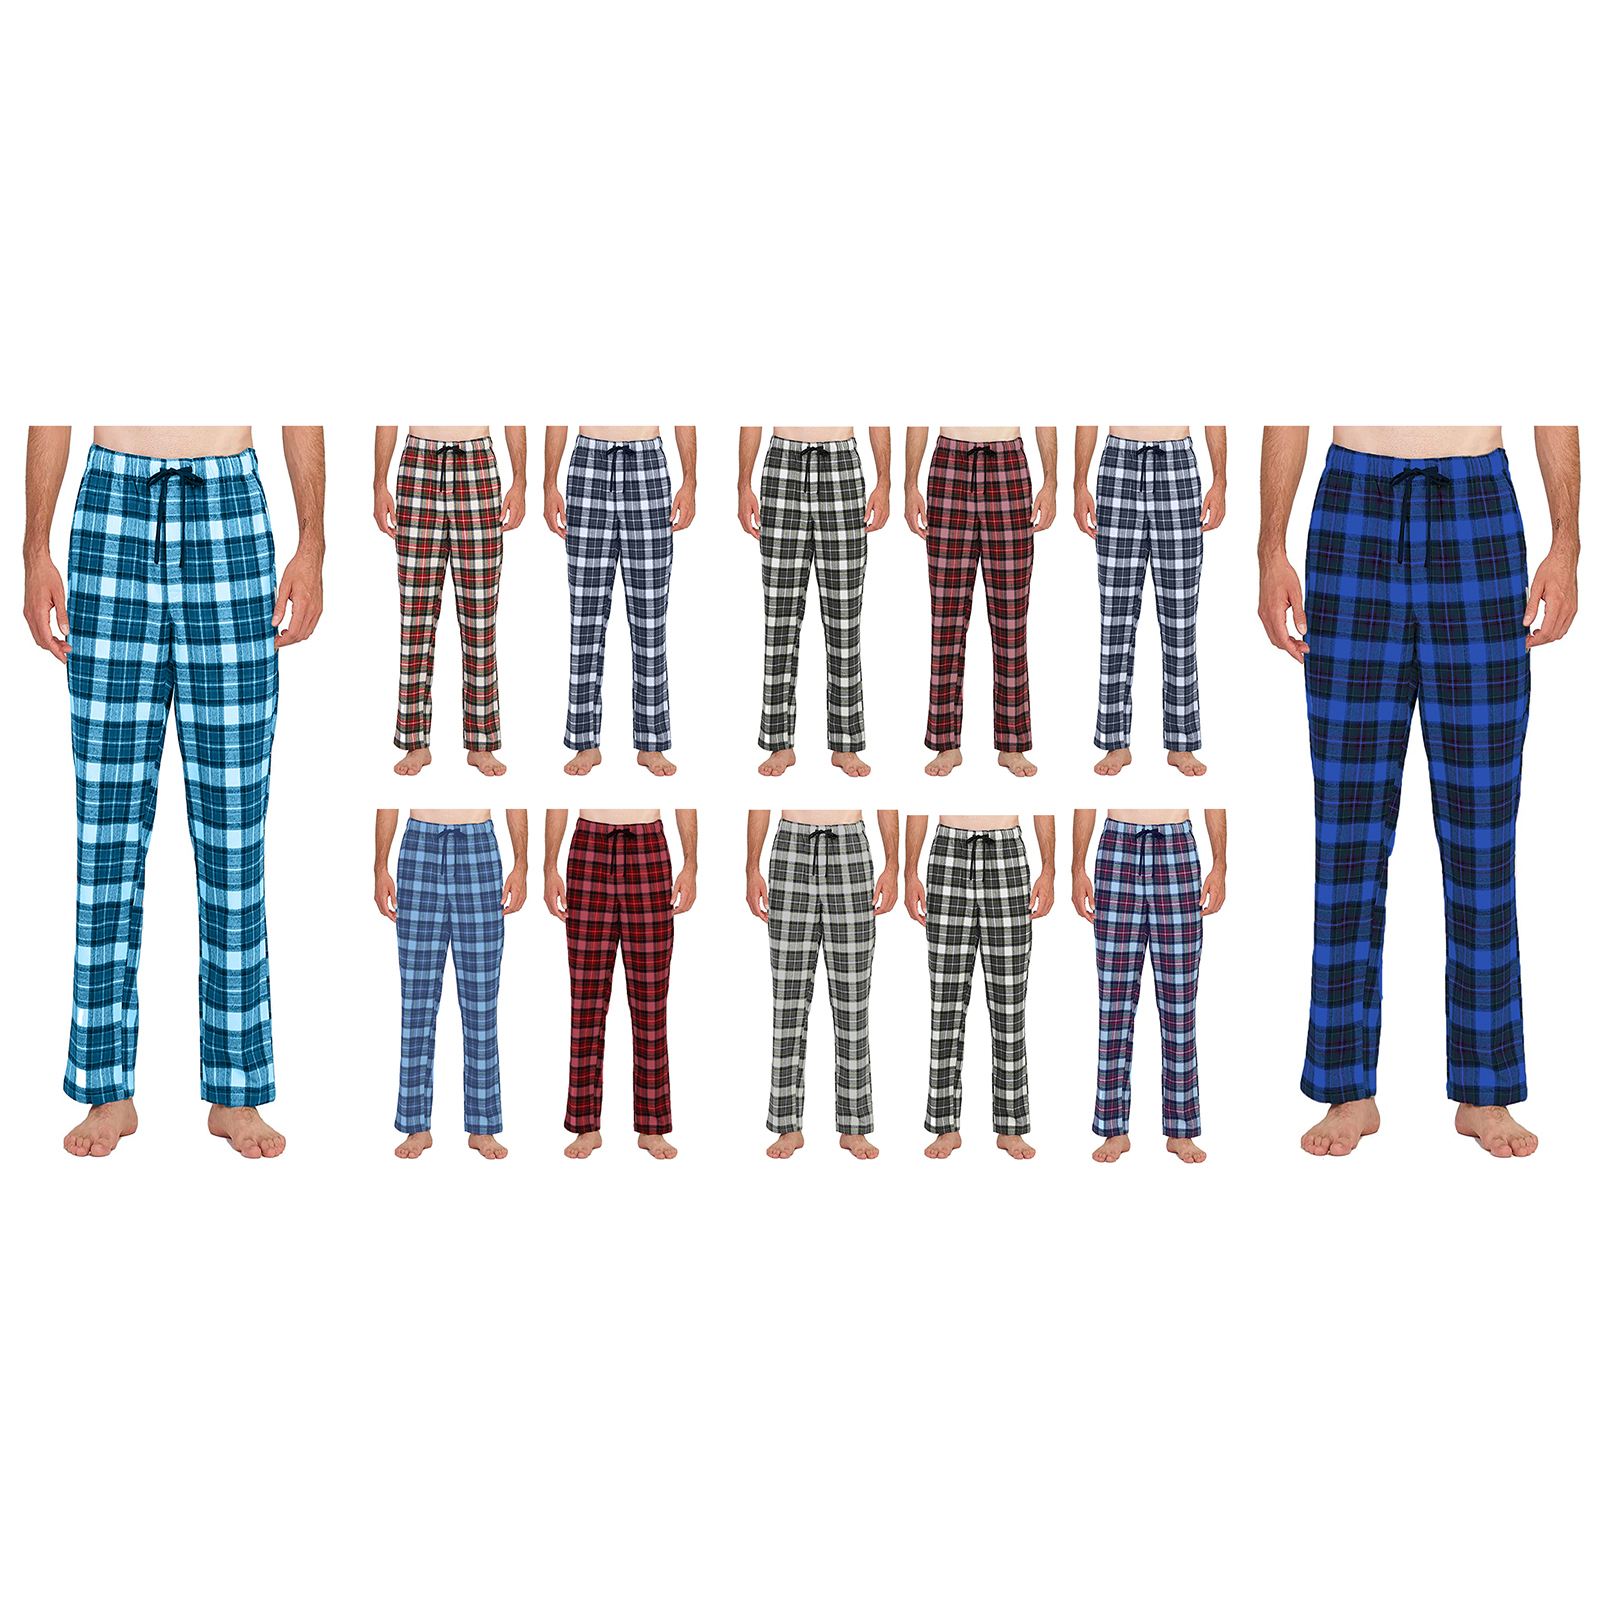 Men's Soft 100% Cotton Flannel Plaid Lounge Pajama Sleep Pants - 3-Pack, Small